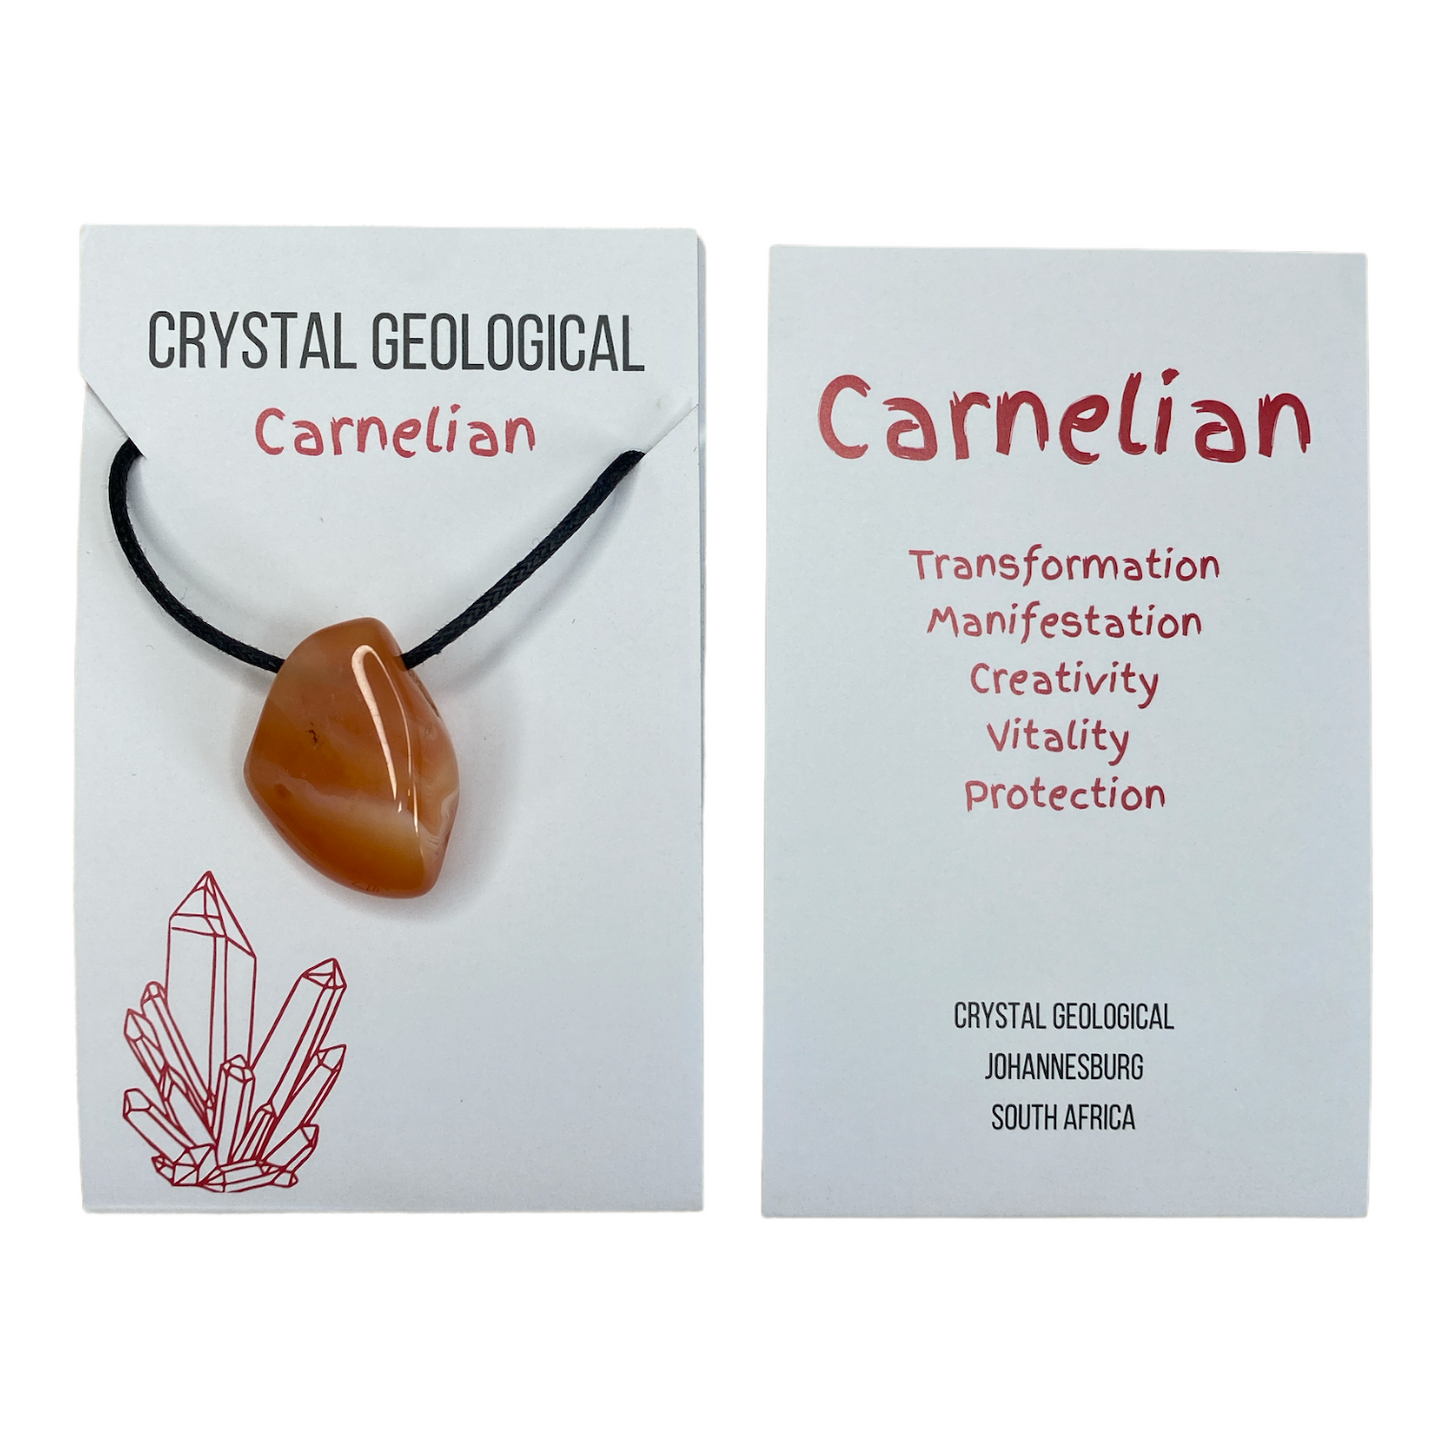 Carnelian Tumble Stone Necklace - Crystal Geological